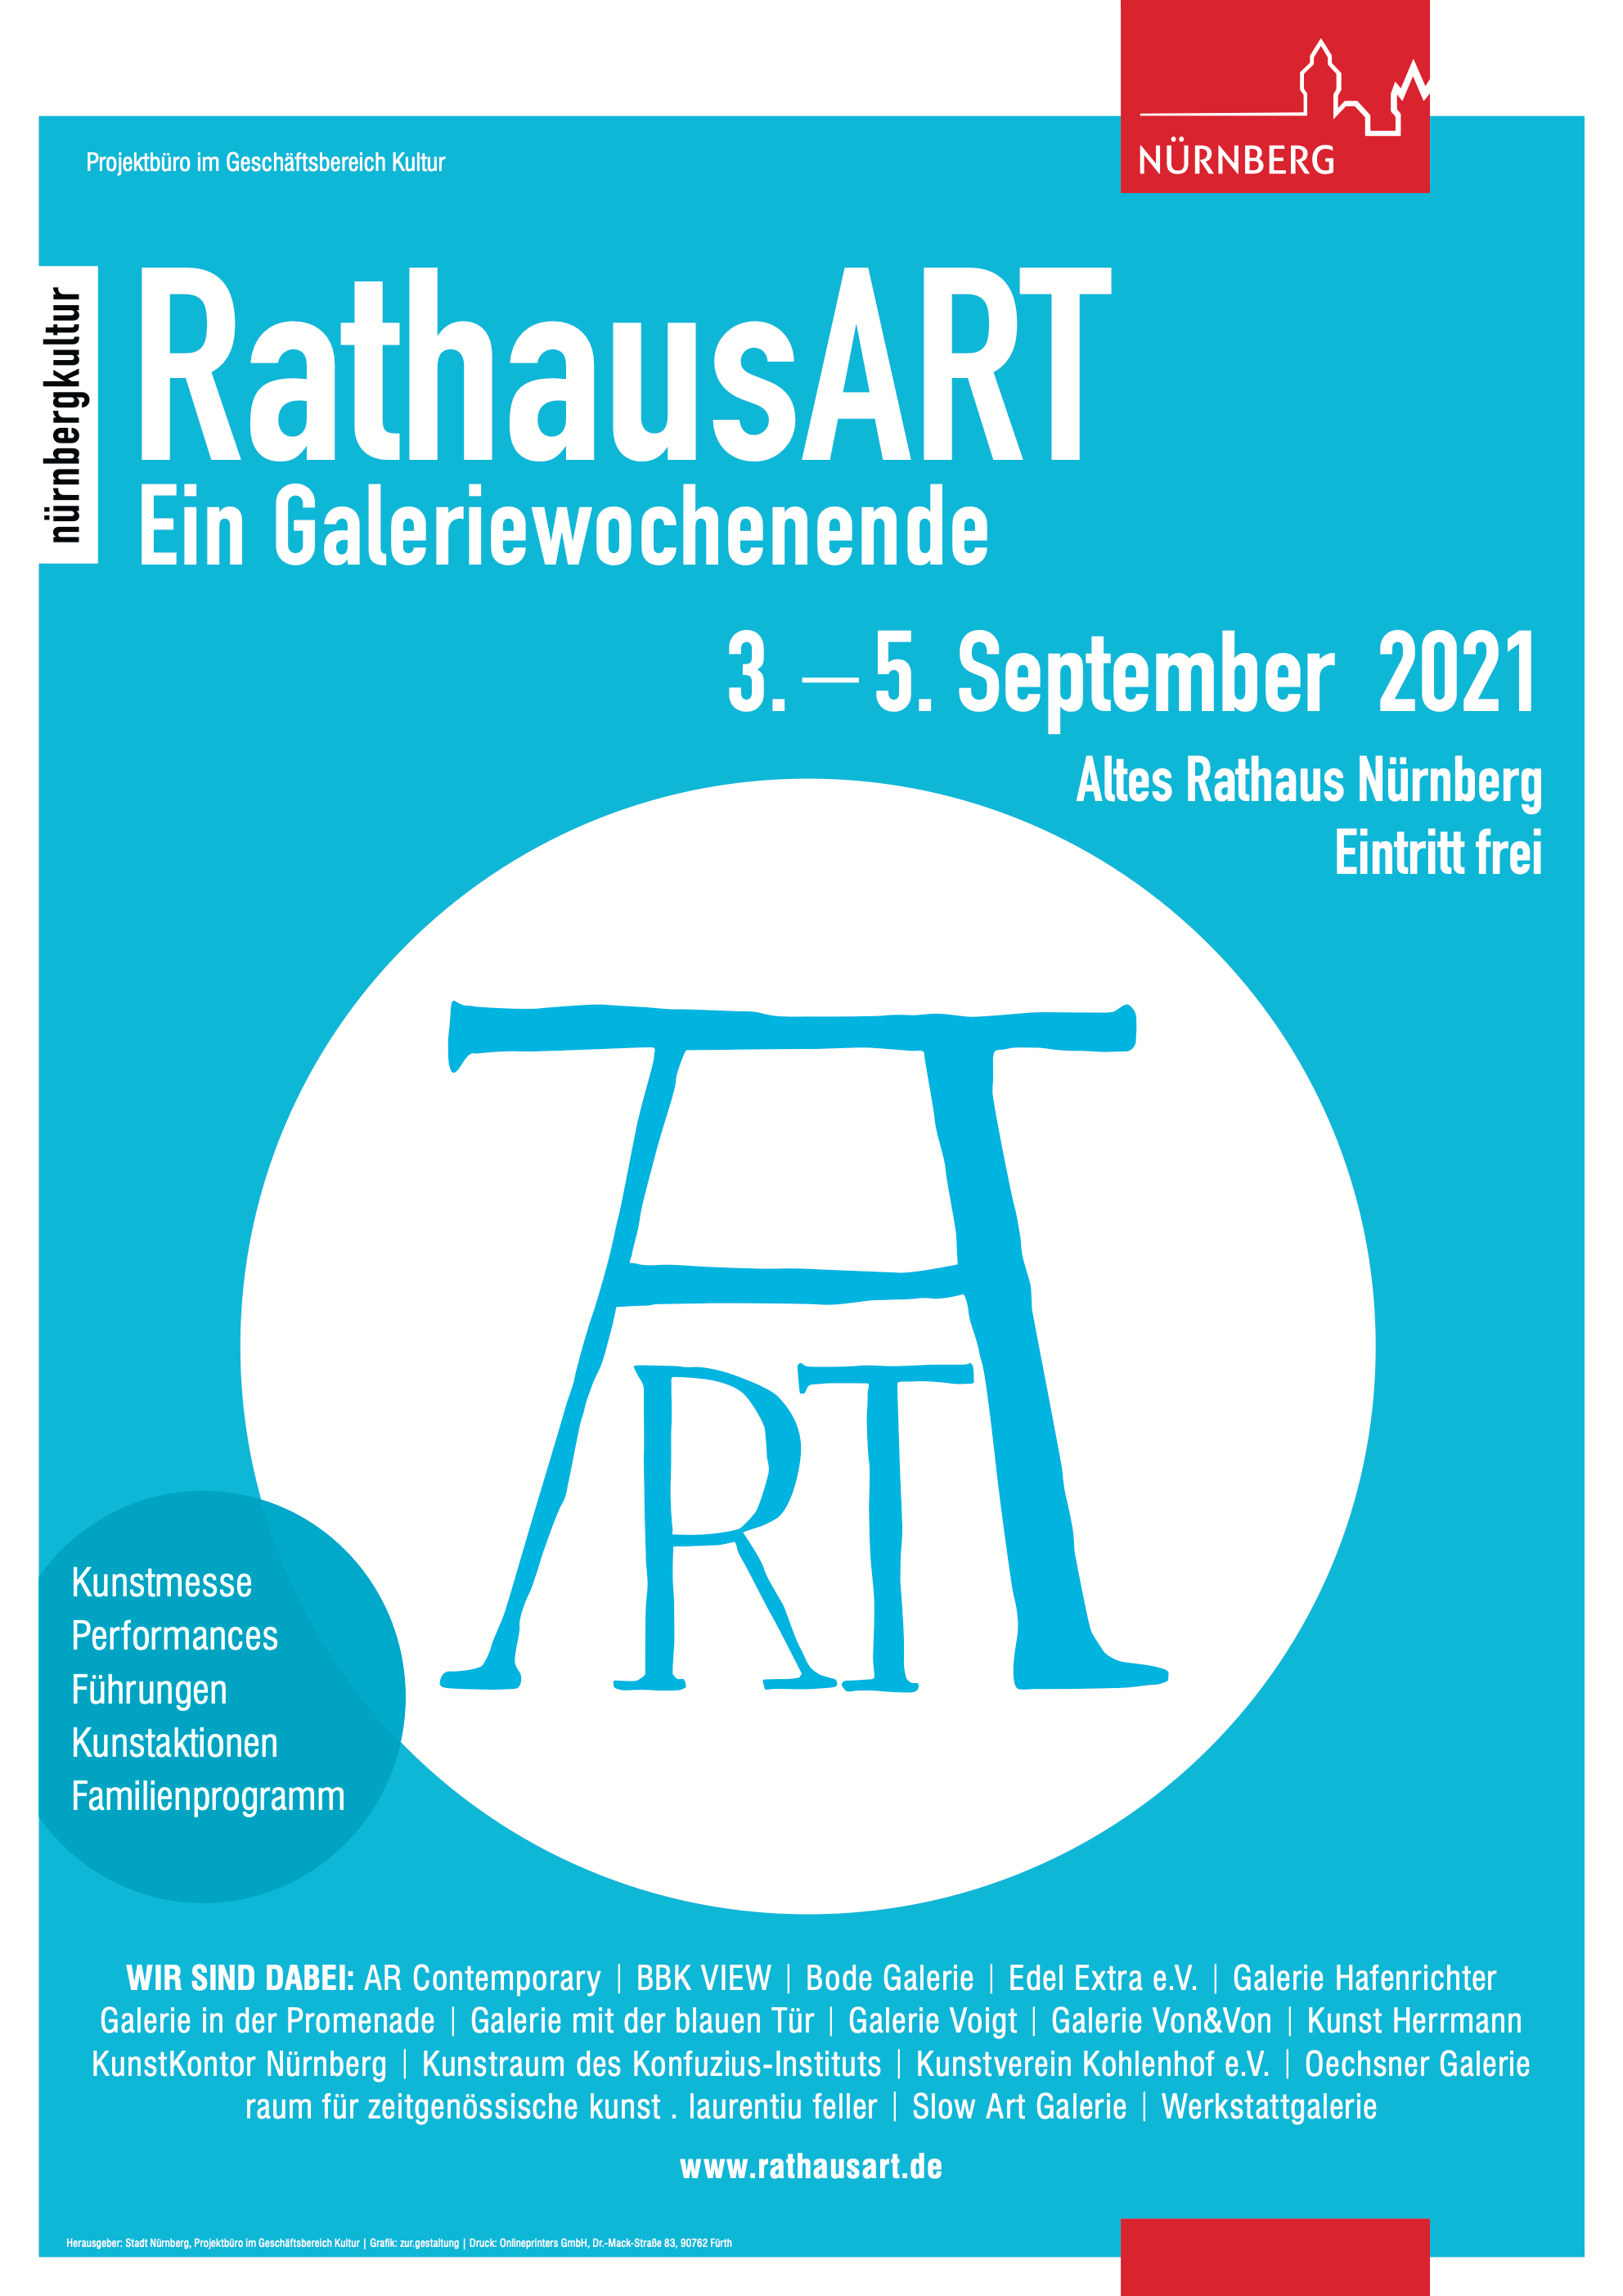 RathausART 2021, 3.-5. September 2021